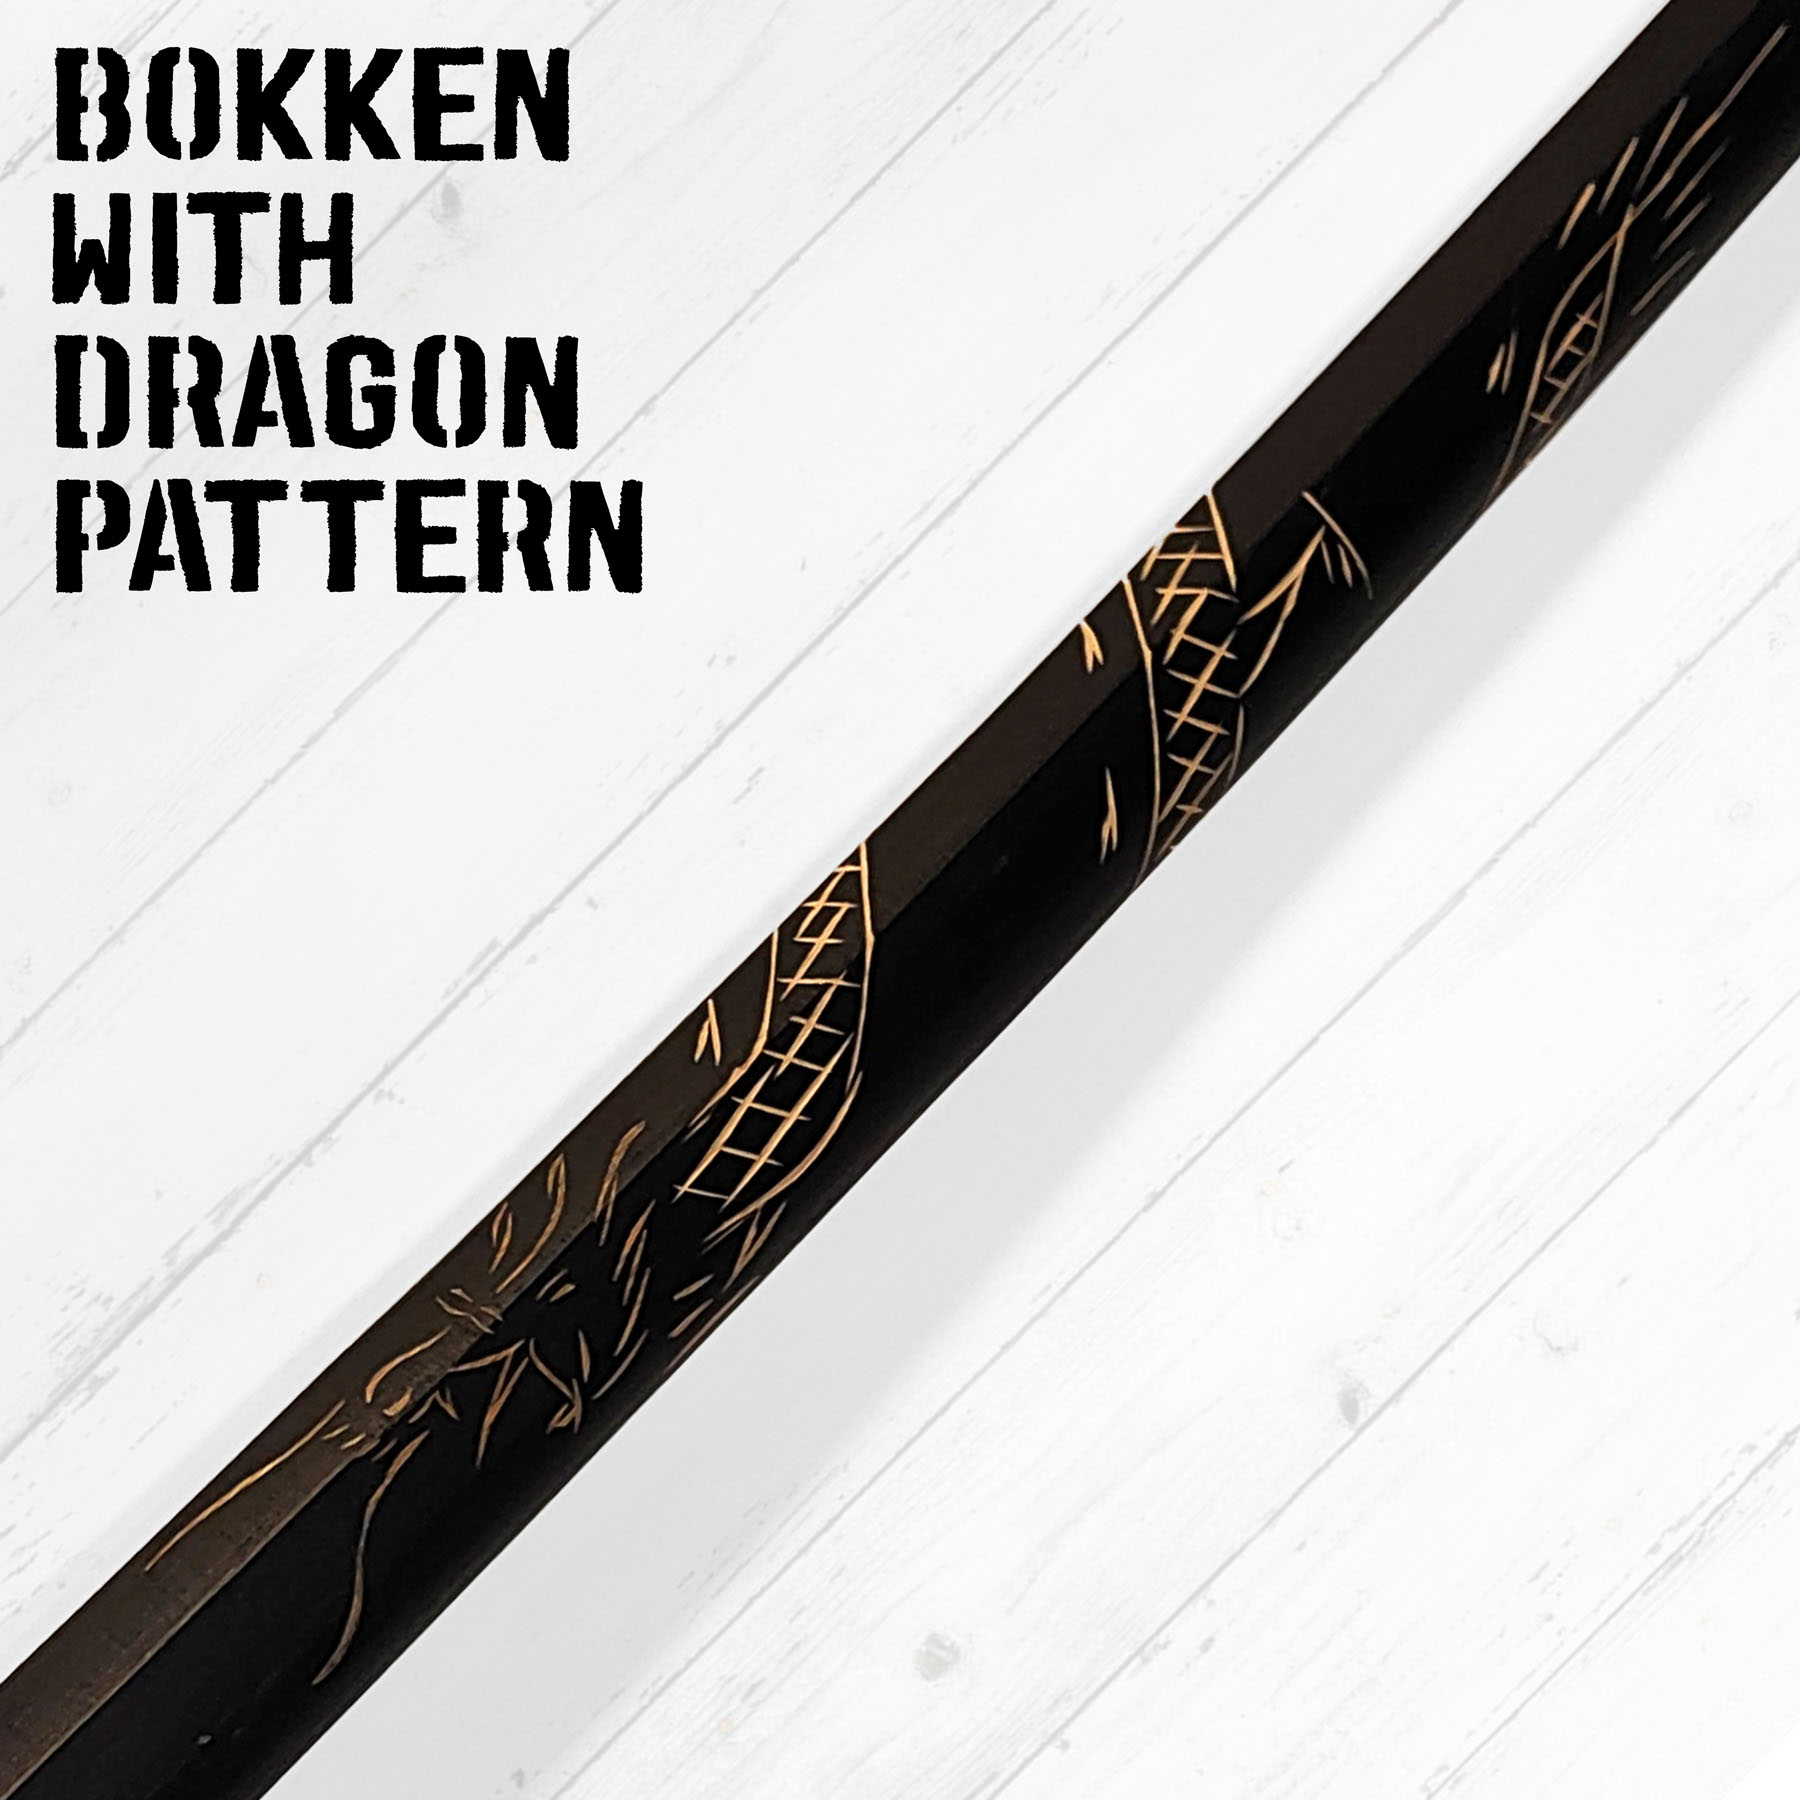 Bokken with dragon pattern